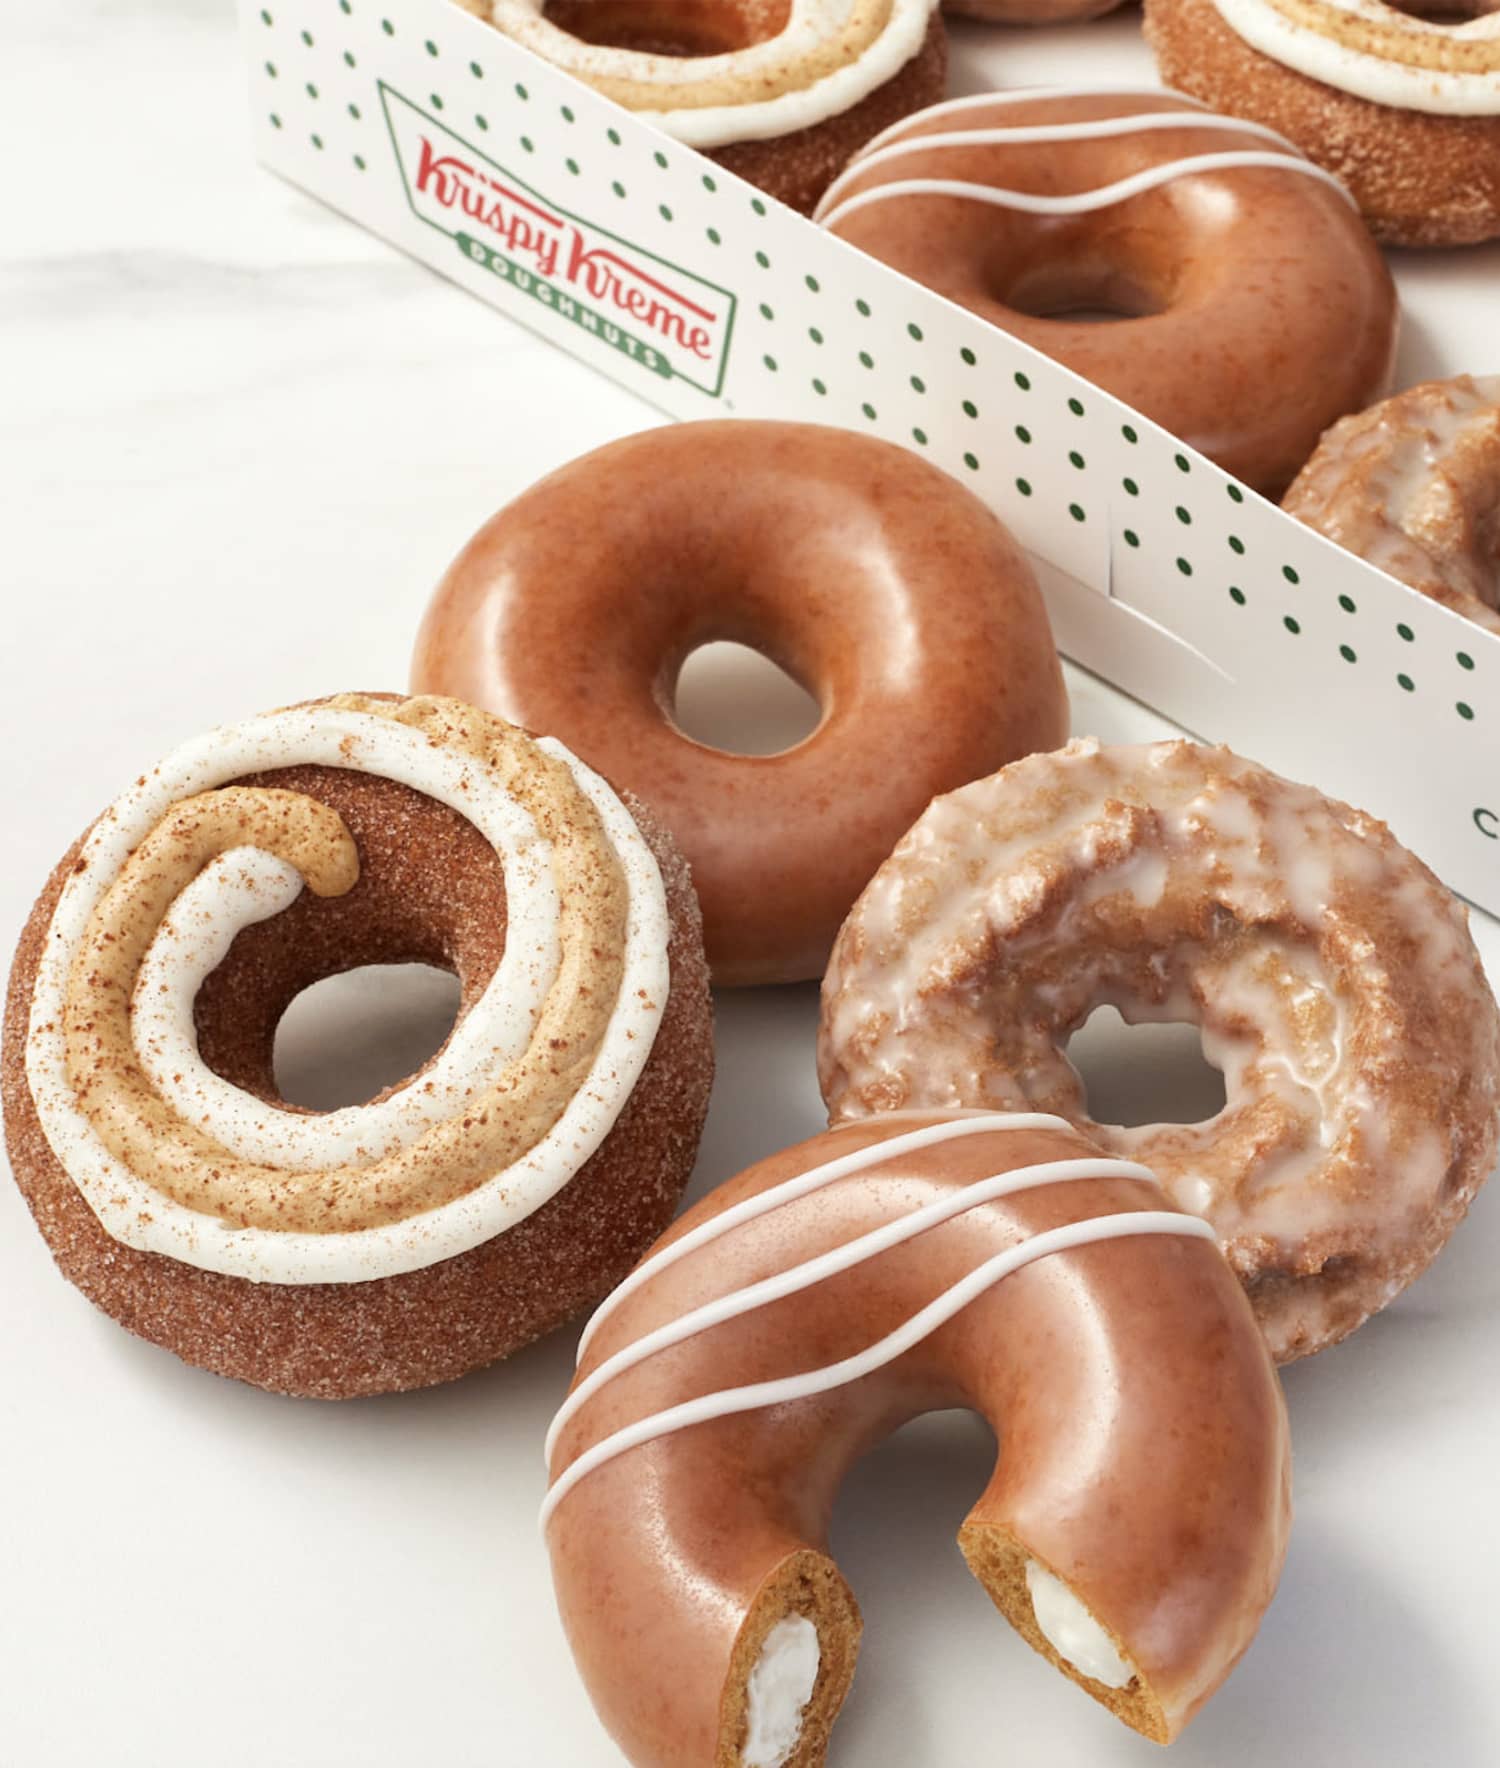 Krispy Kreme’s Fall Menu Is Arriving at Locations Next Week and It Includes 2 New Pumpkin-Flavored Items